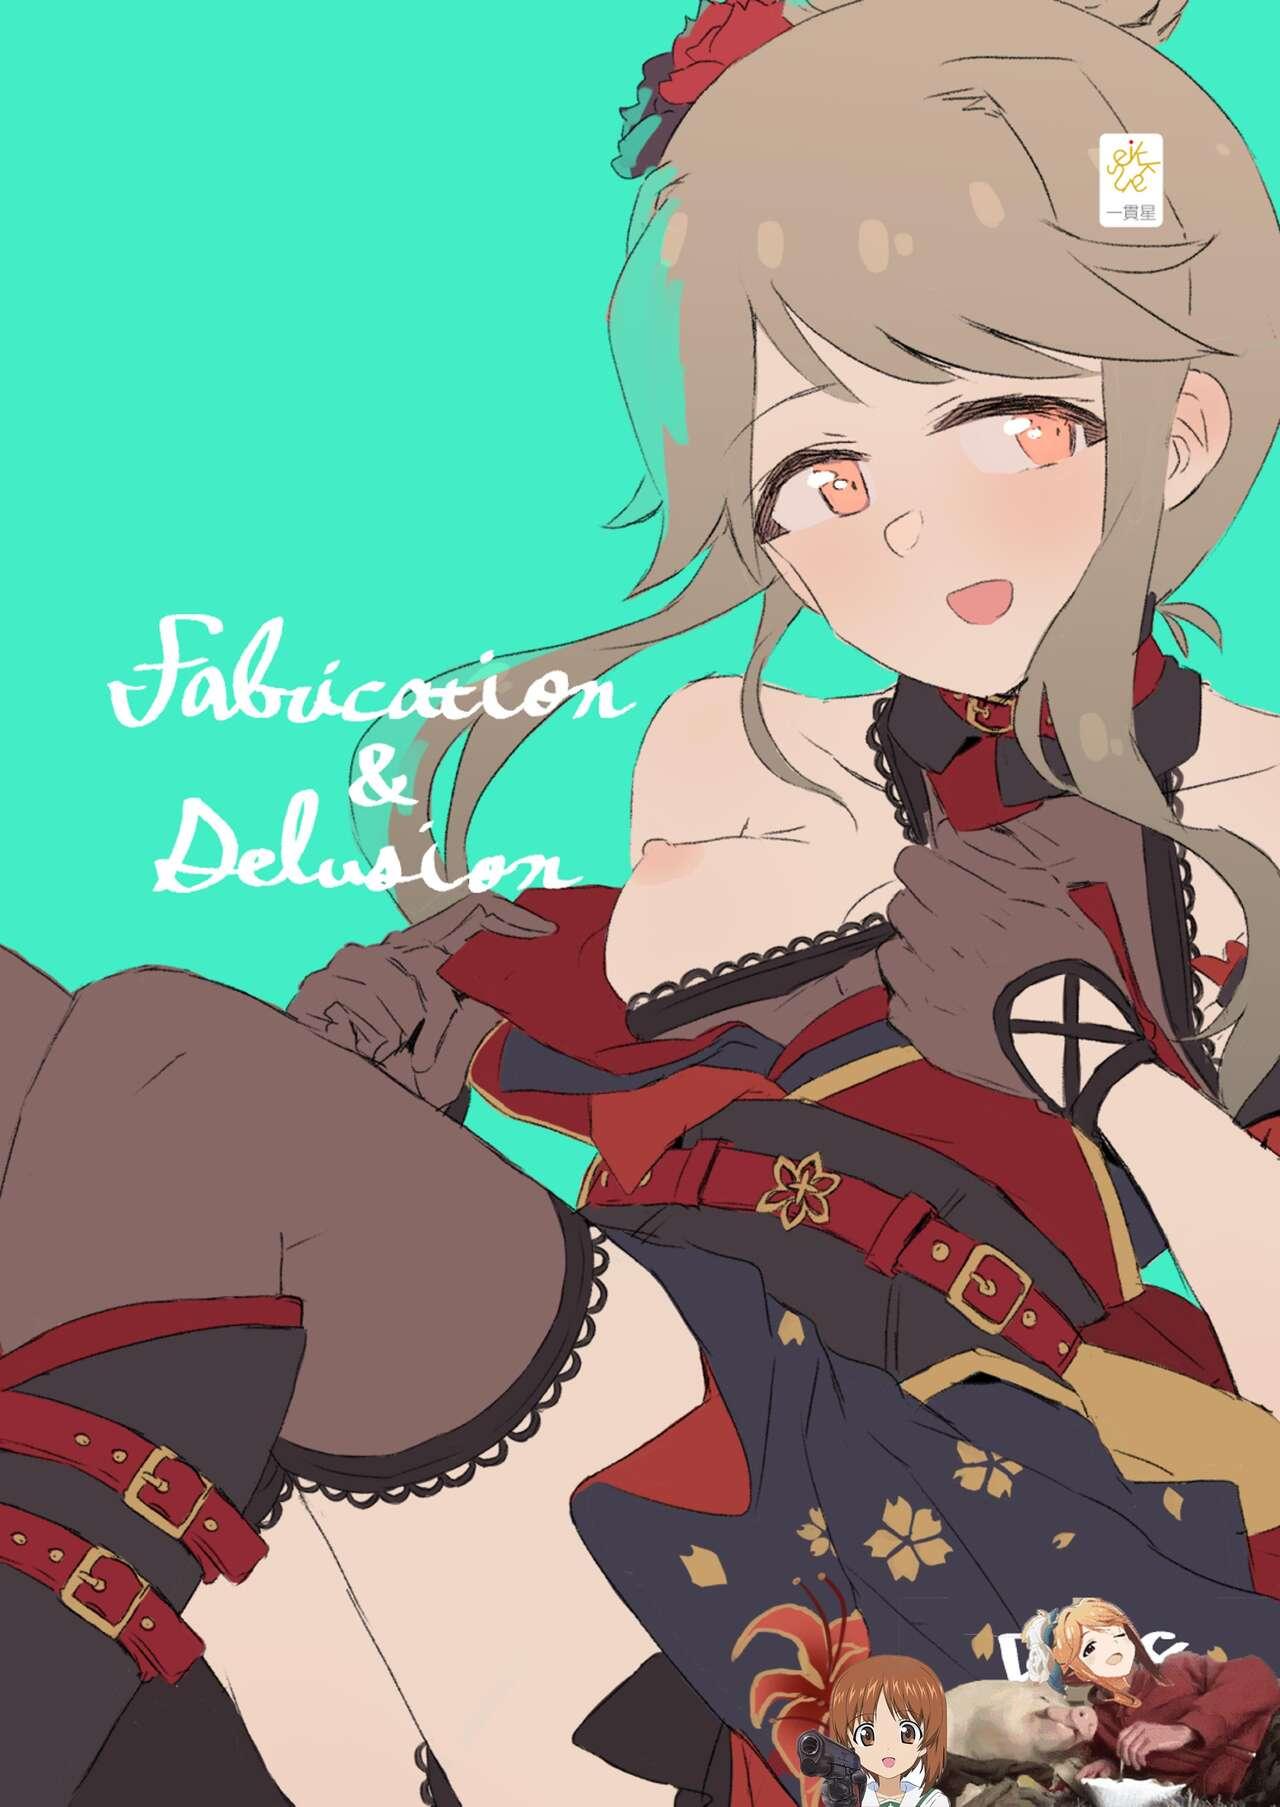 Fabrication&Delusion 1